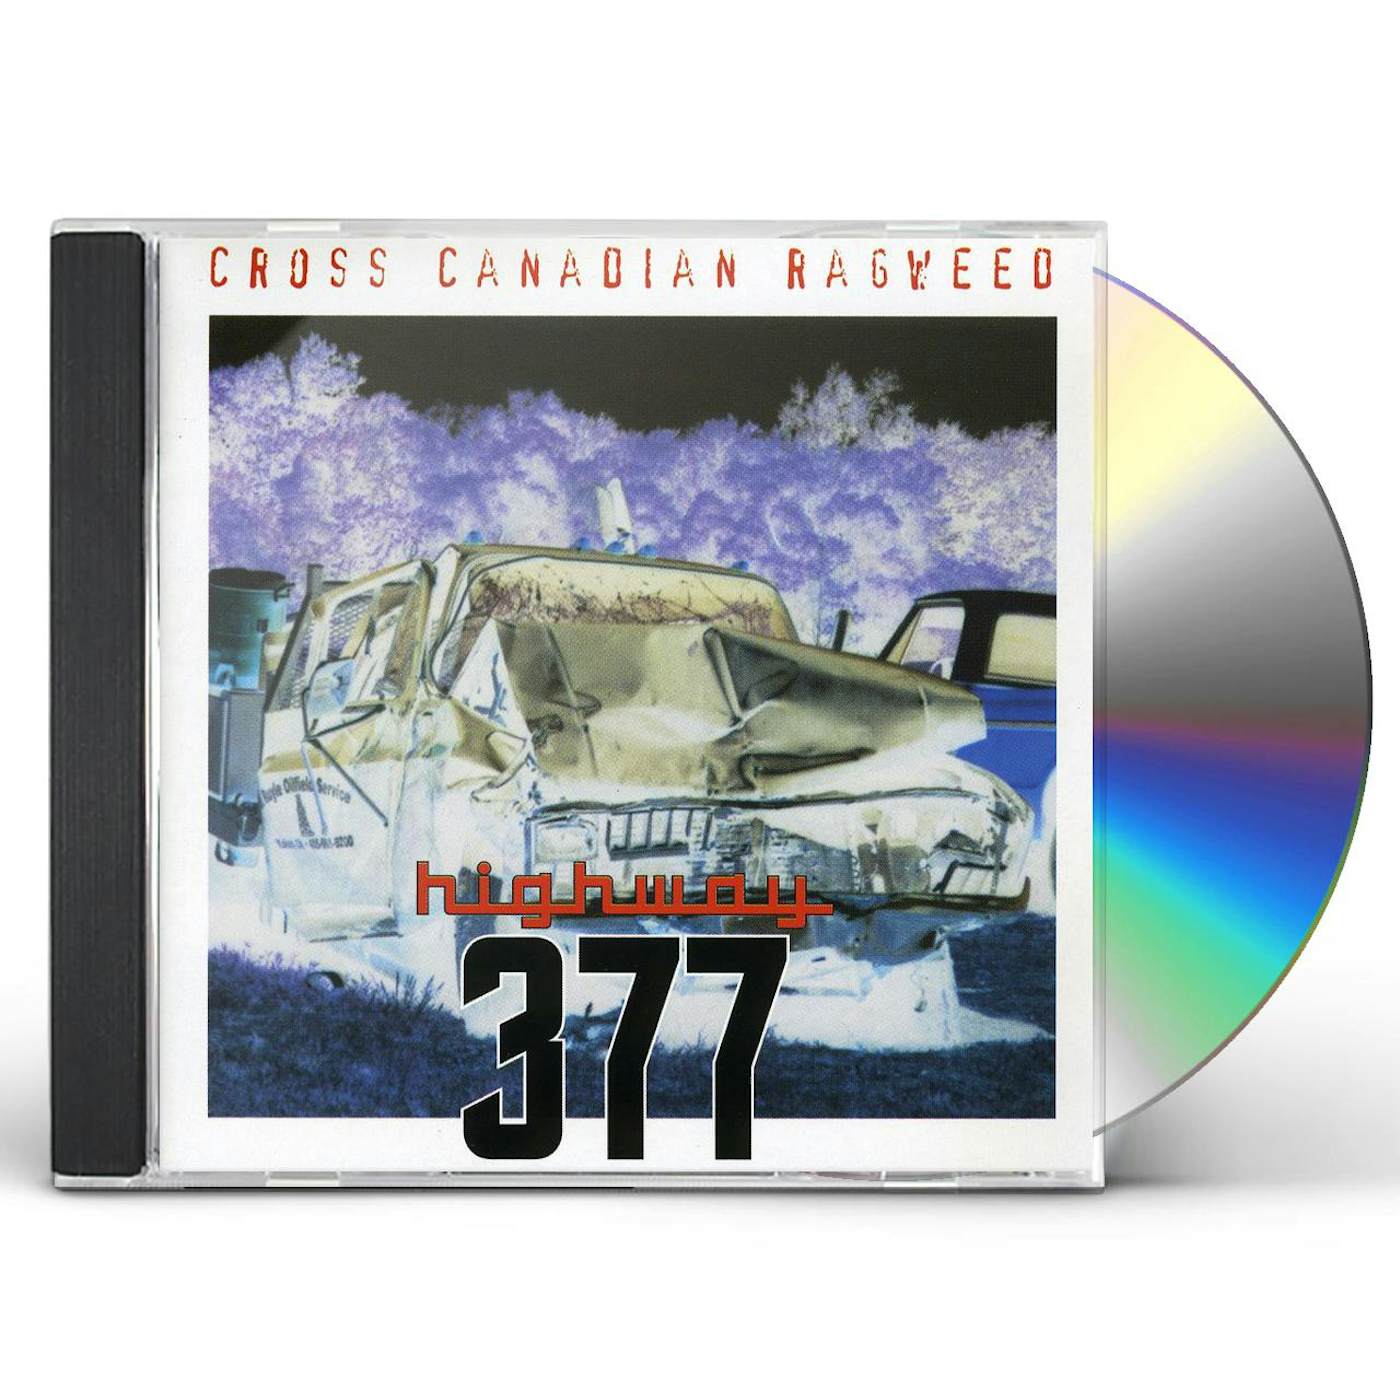 Cross Canadian Ragweed HIGHWAY 377 CD